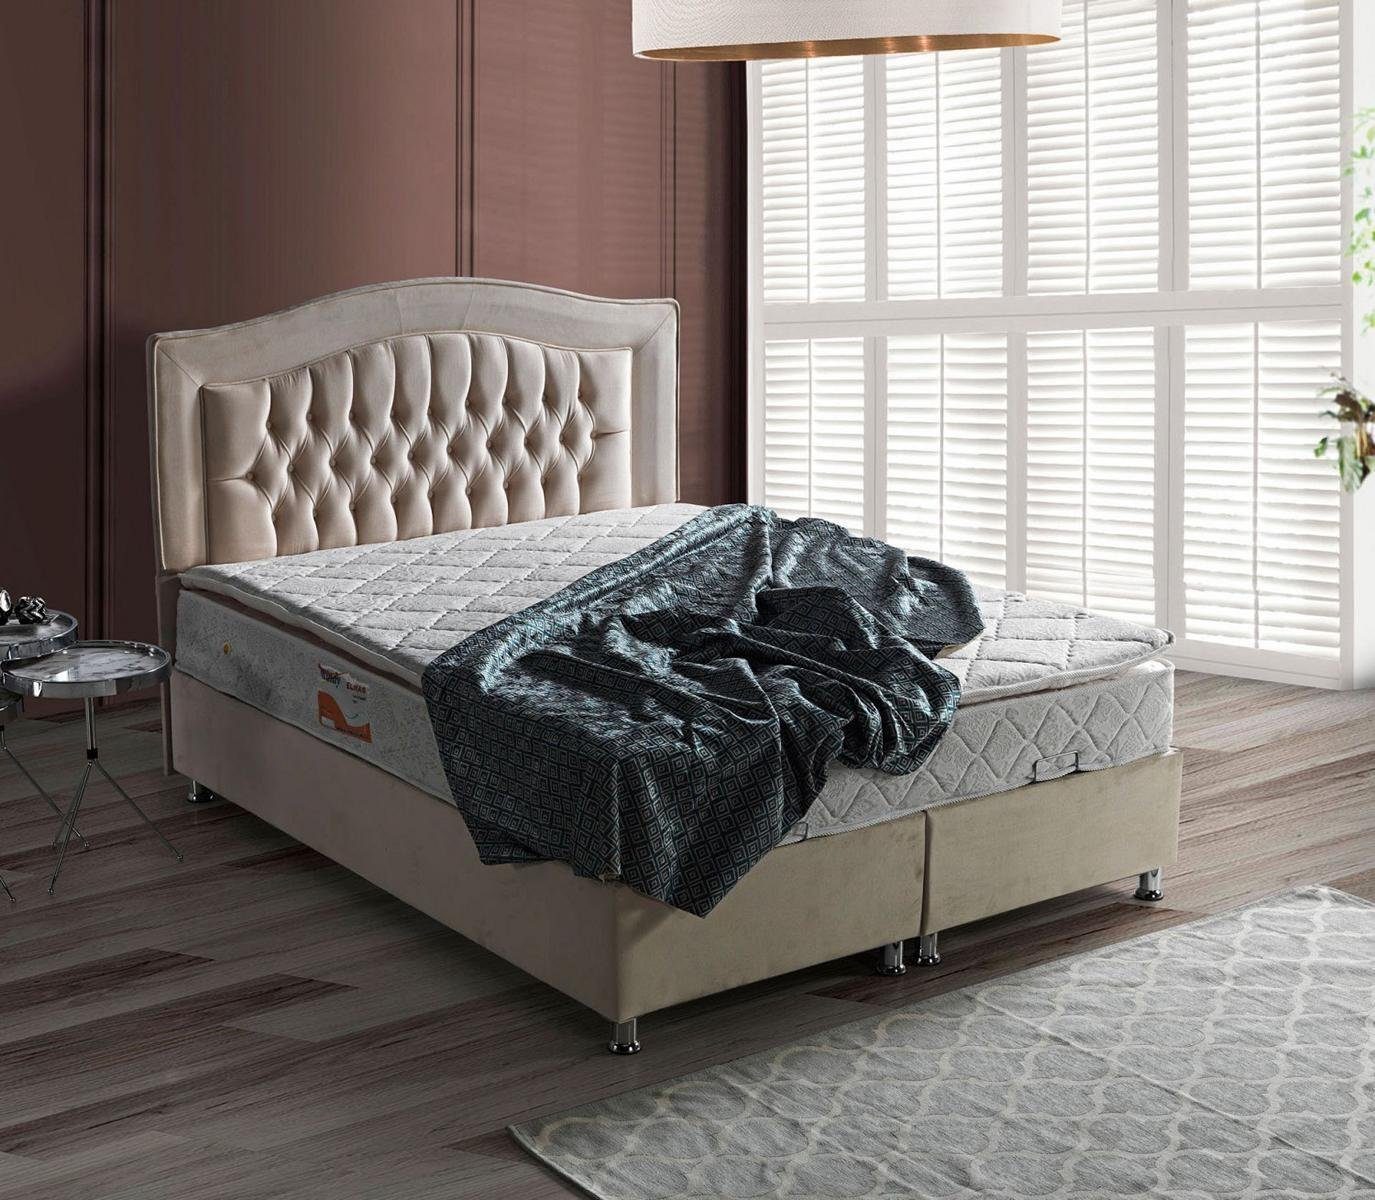 JVmoebel Bett Bett Design Betten Luxus Beige Polster Schlafzimmer Möbel Silber (Bett), Made In Europe